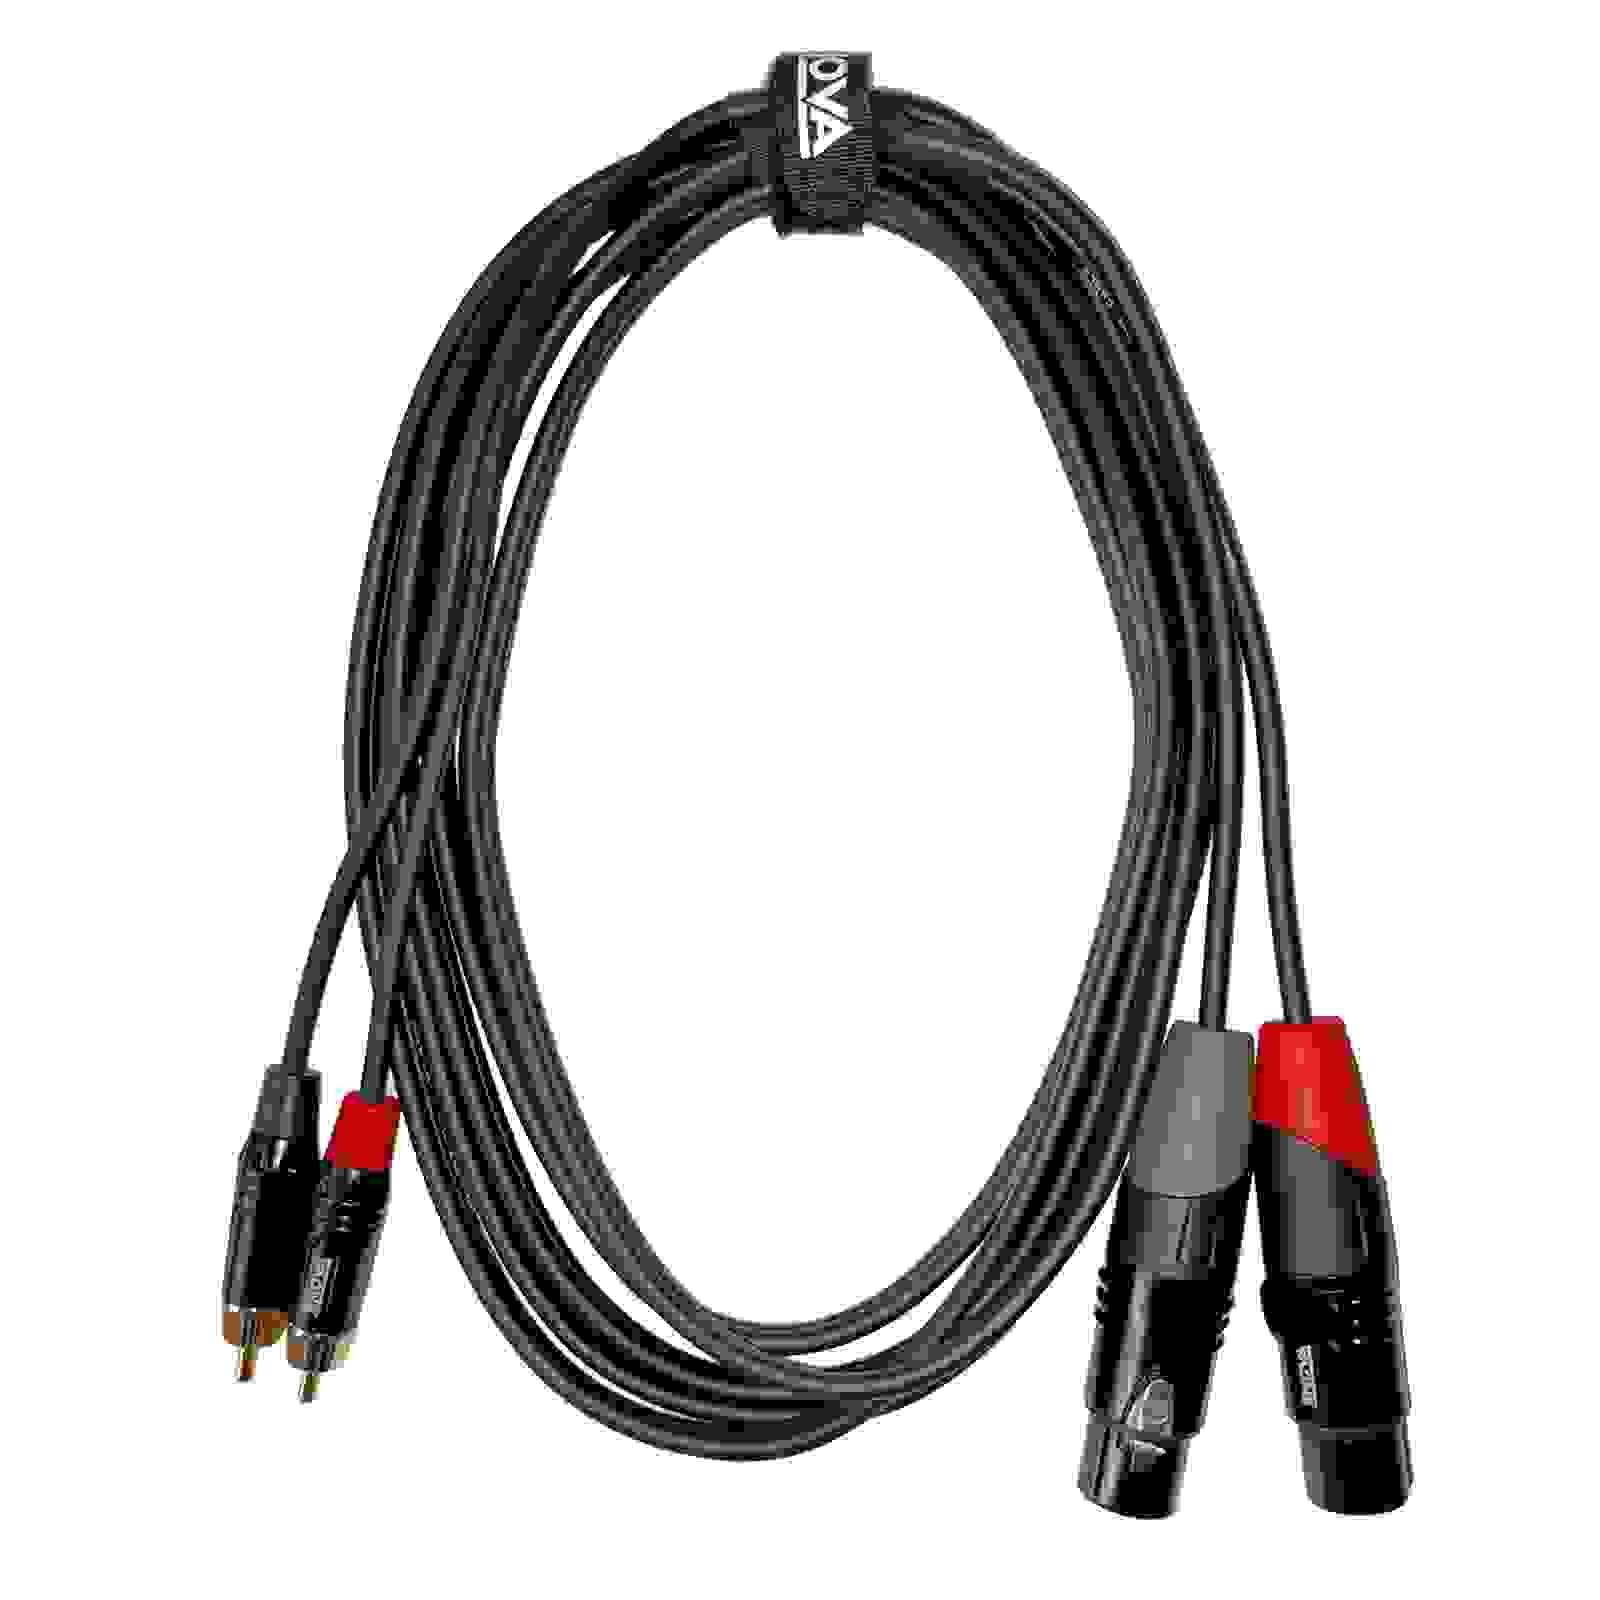 ENOVA XLR Microphone Cable XLFM-Series XLR f to XLR m 3 pin 2 meters